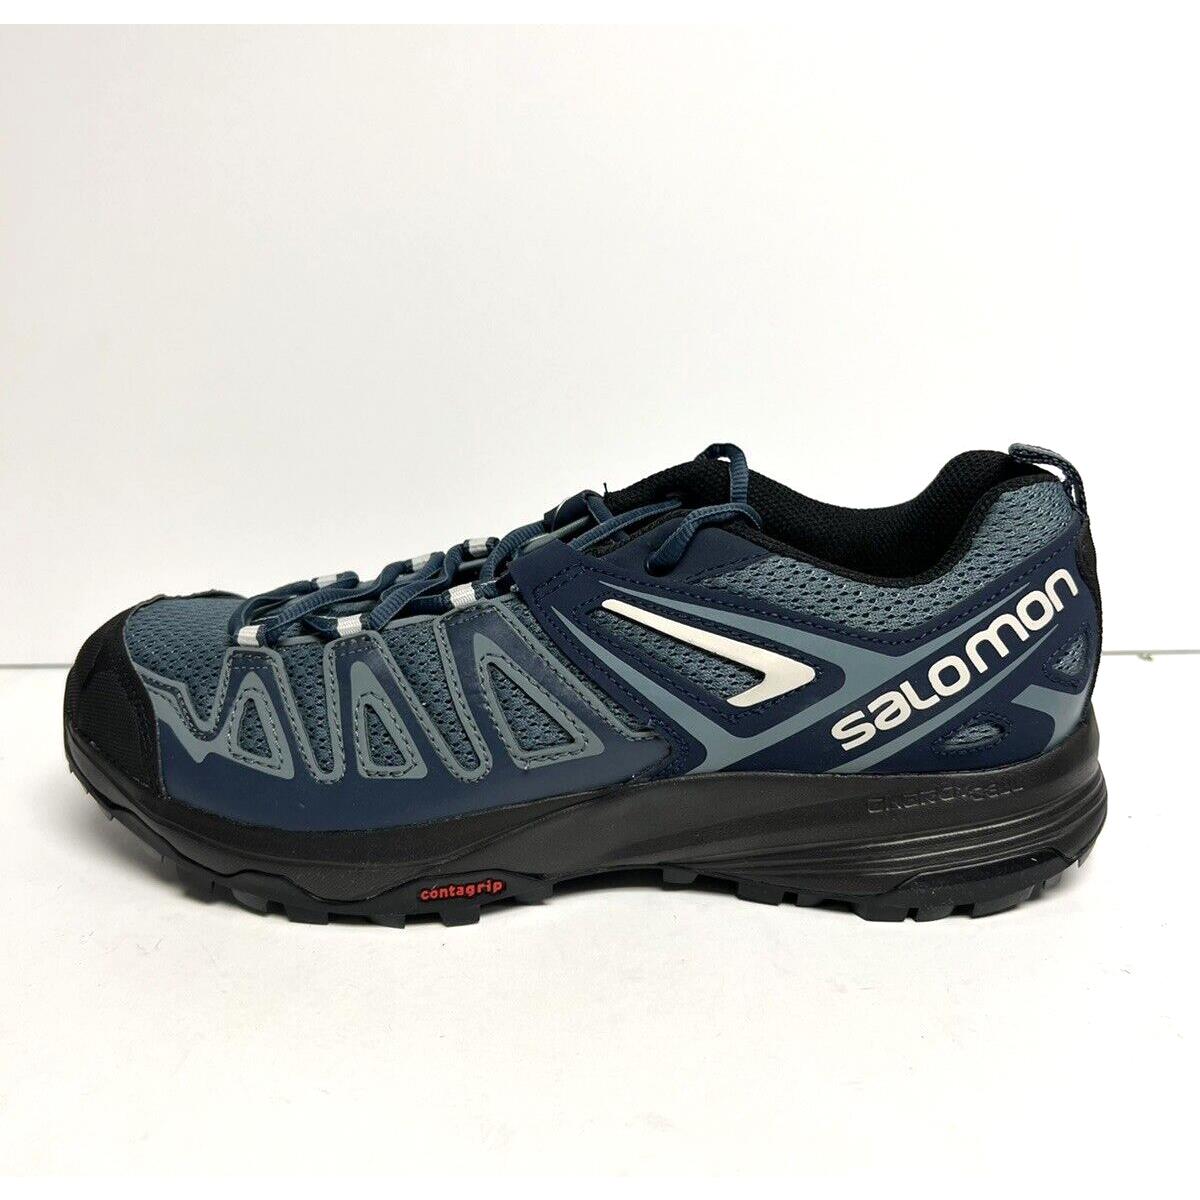 Salomon Womens X Crest Trail Hiking Shoes Stormy Blue Size 11 M